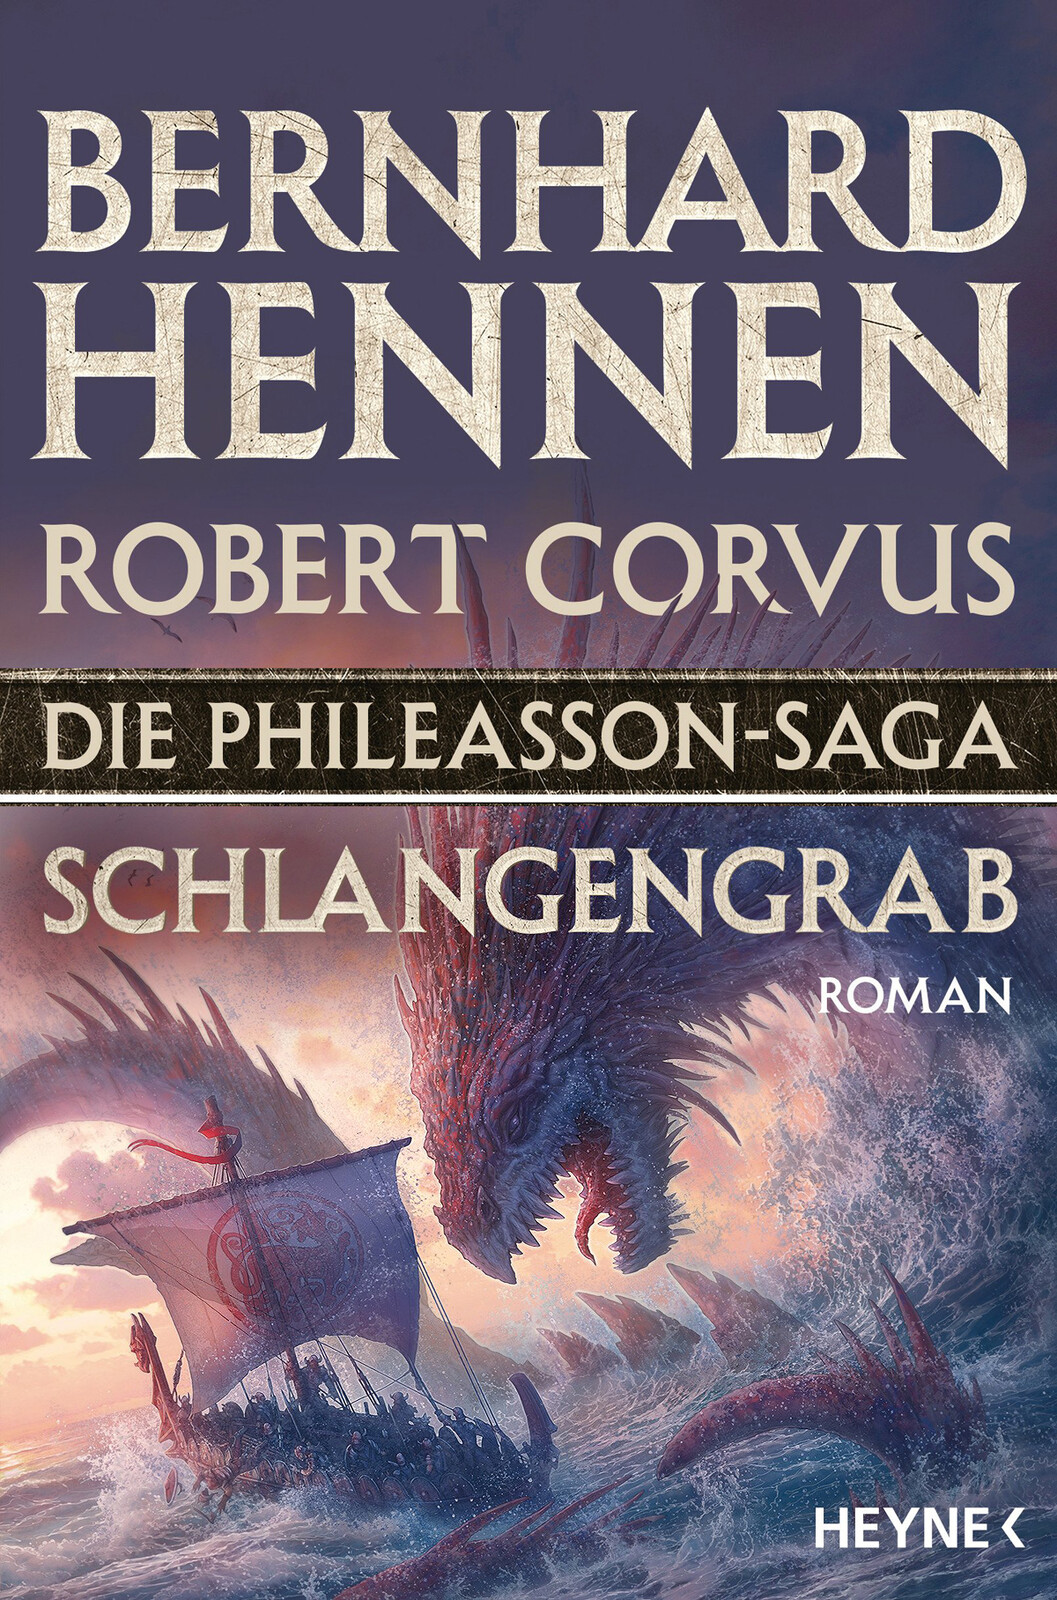 Die Phileasson-Saga Book Five -  Schlangengrab Cover Layout